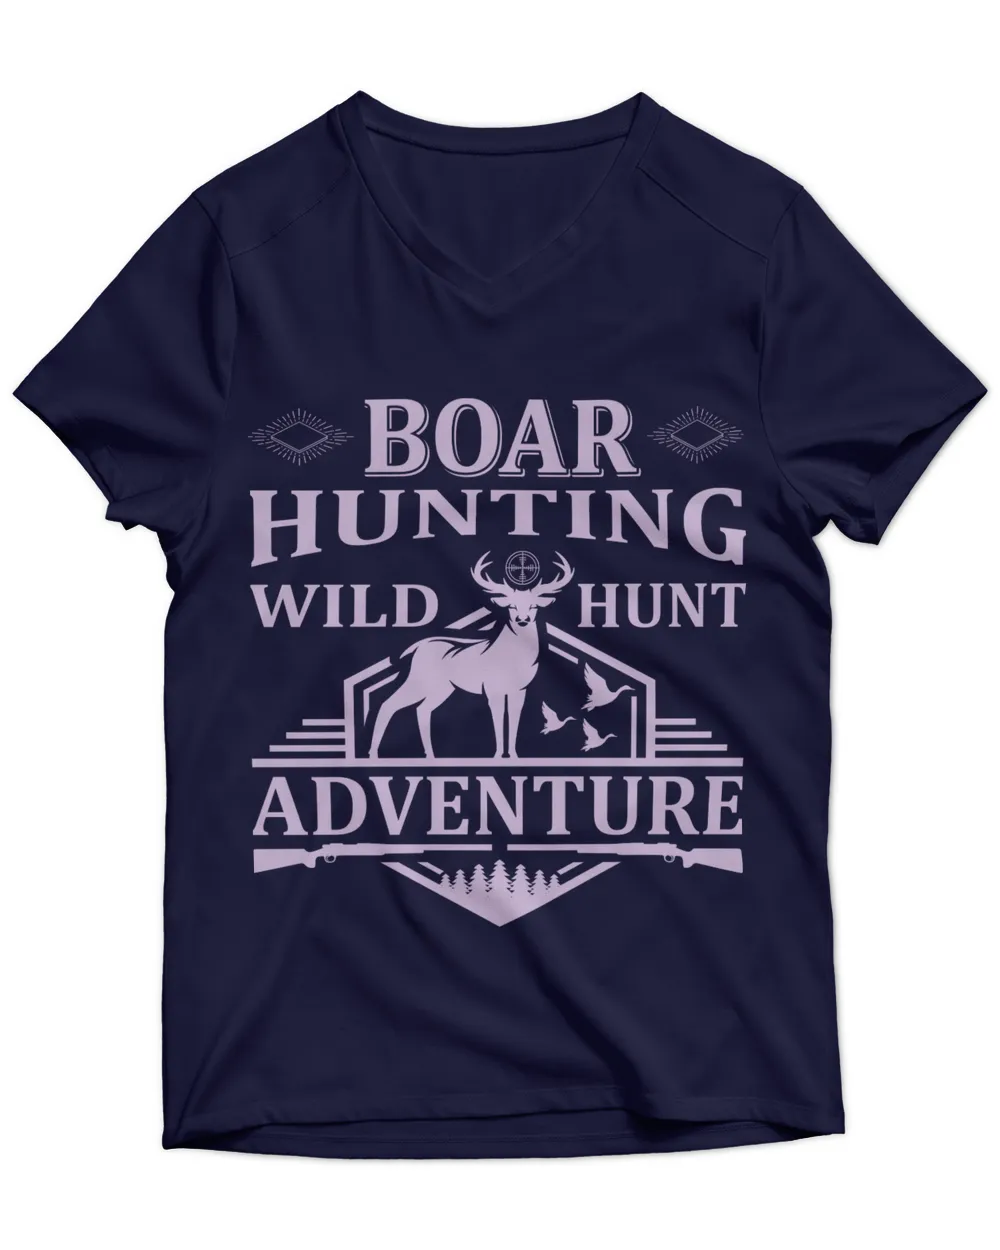 Hunting T-Shirt, Hunting Shirt for Dad, Grandfather (79)